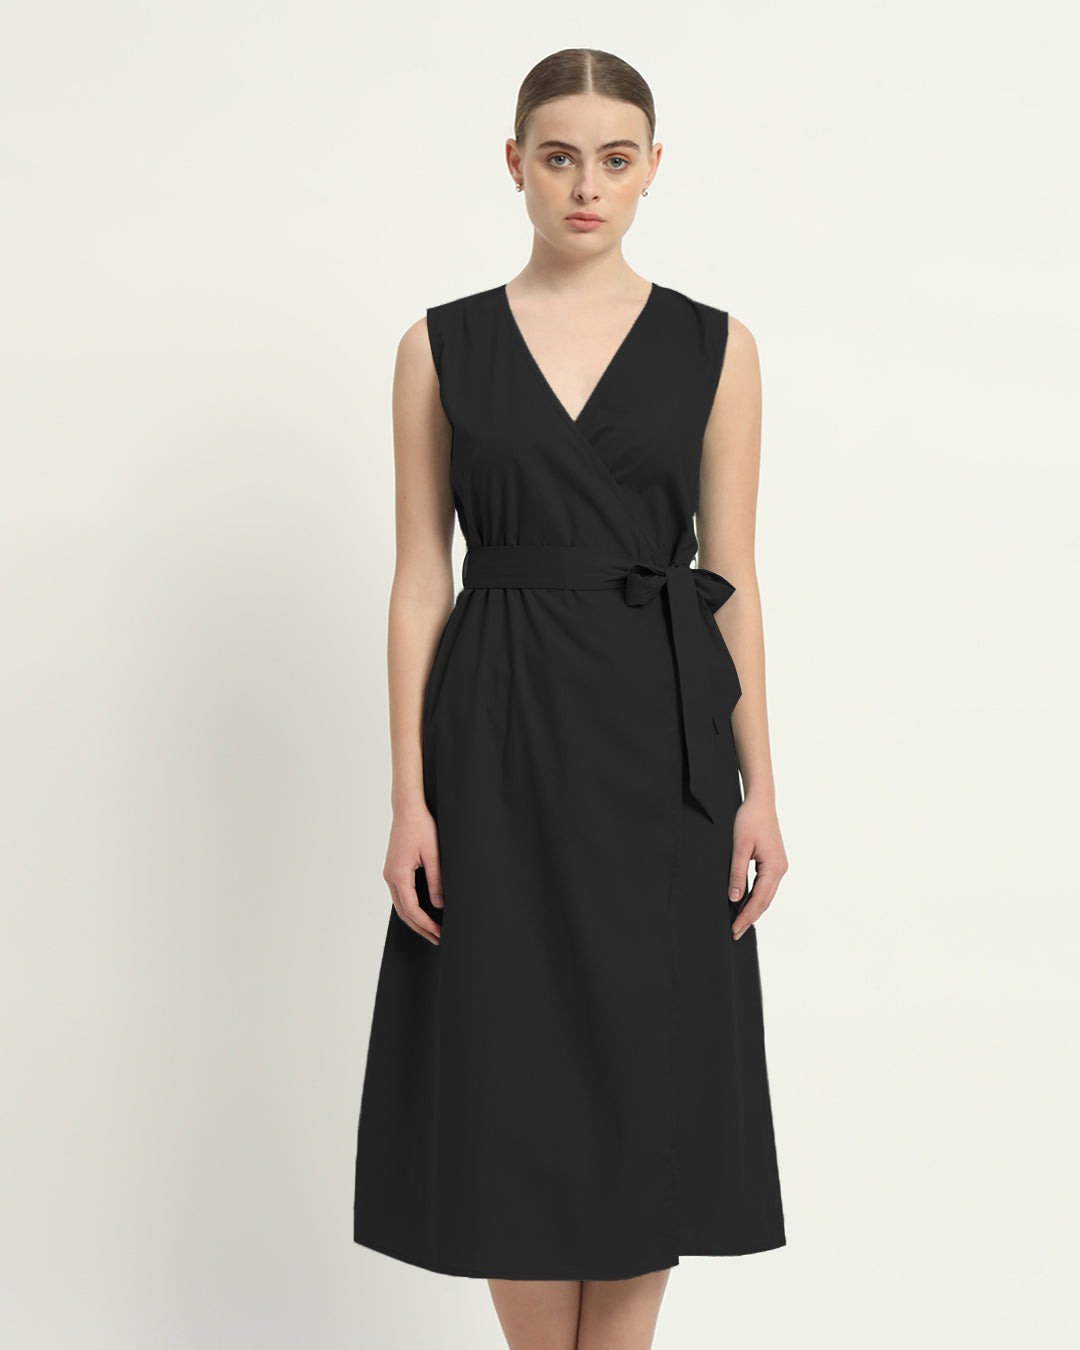 The Windsor Noir Cotton Dress